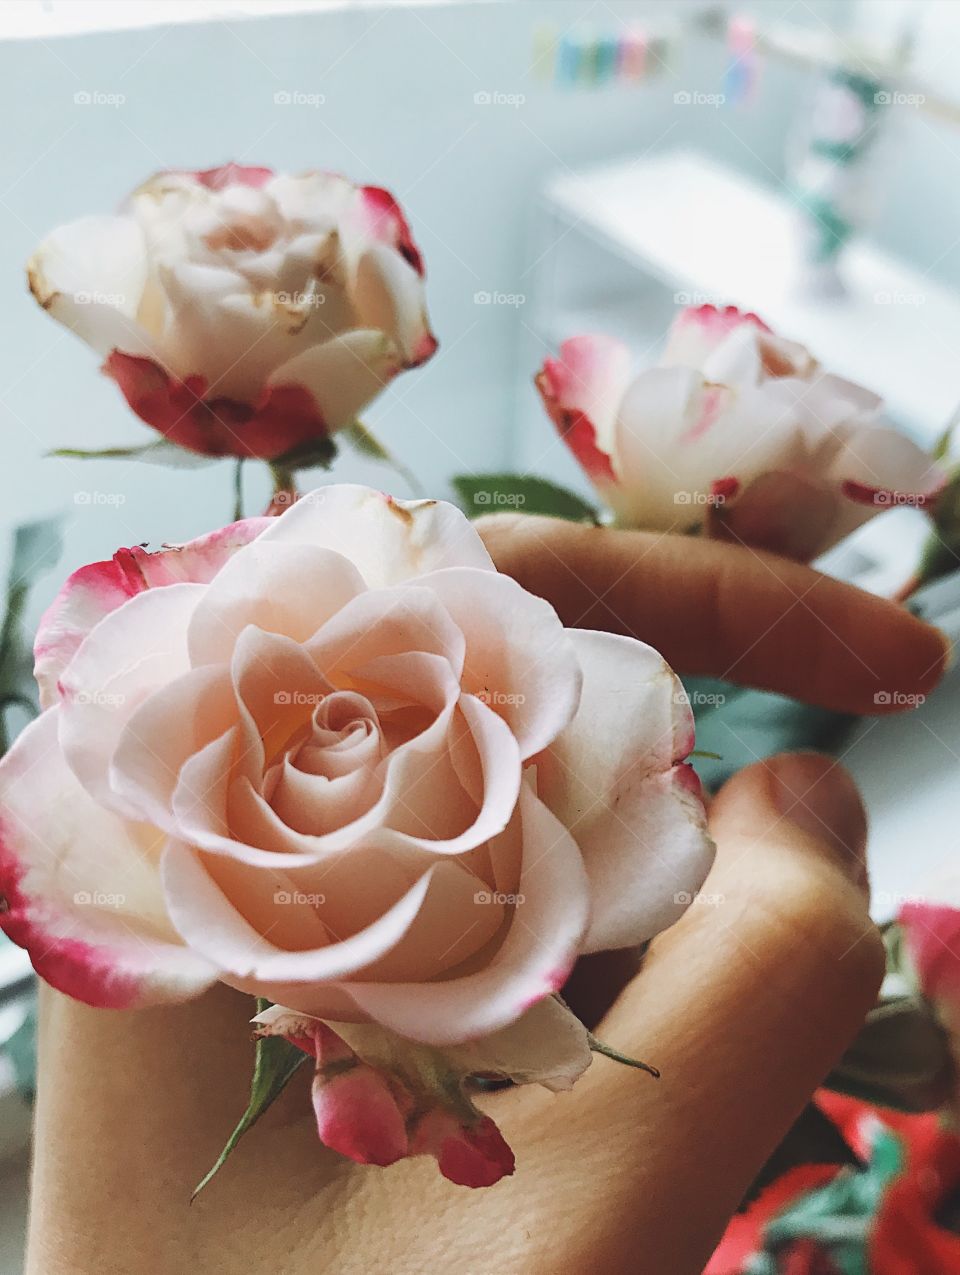 Flower, Rose, Love, Wedding, Romance